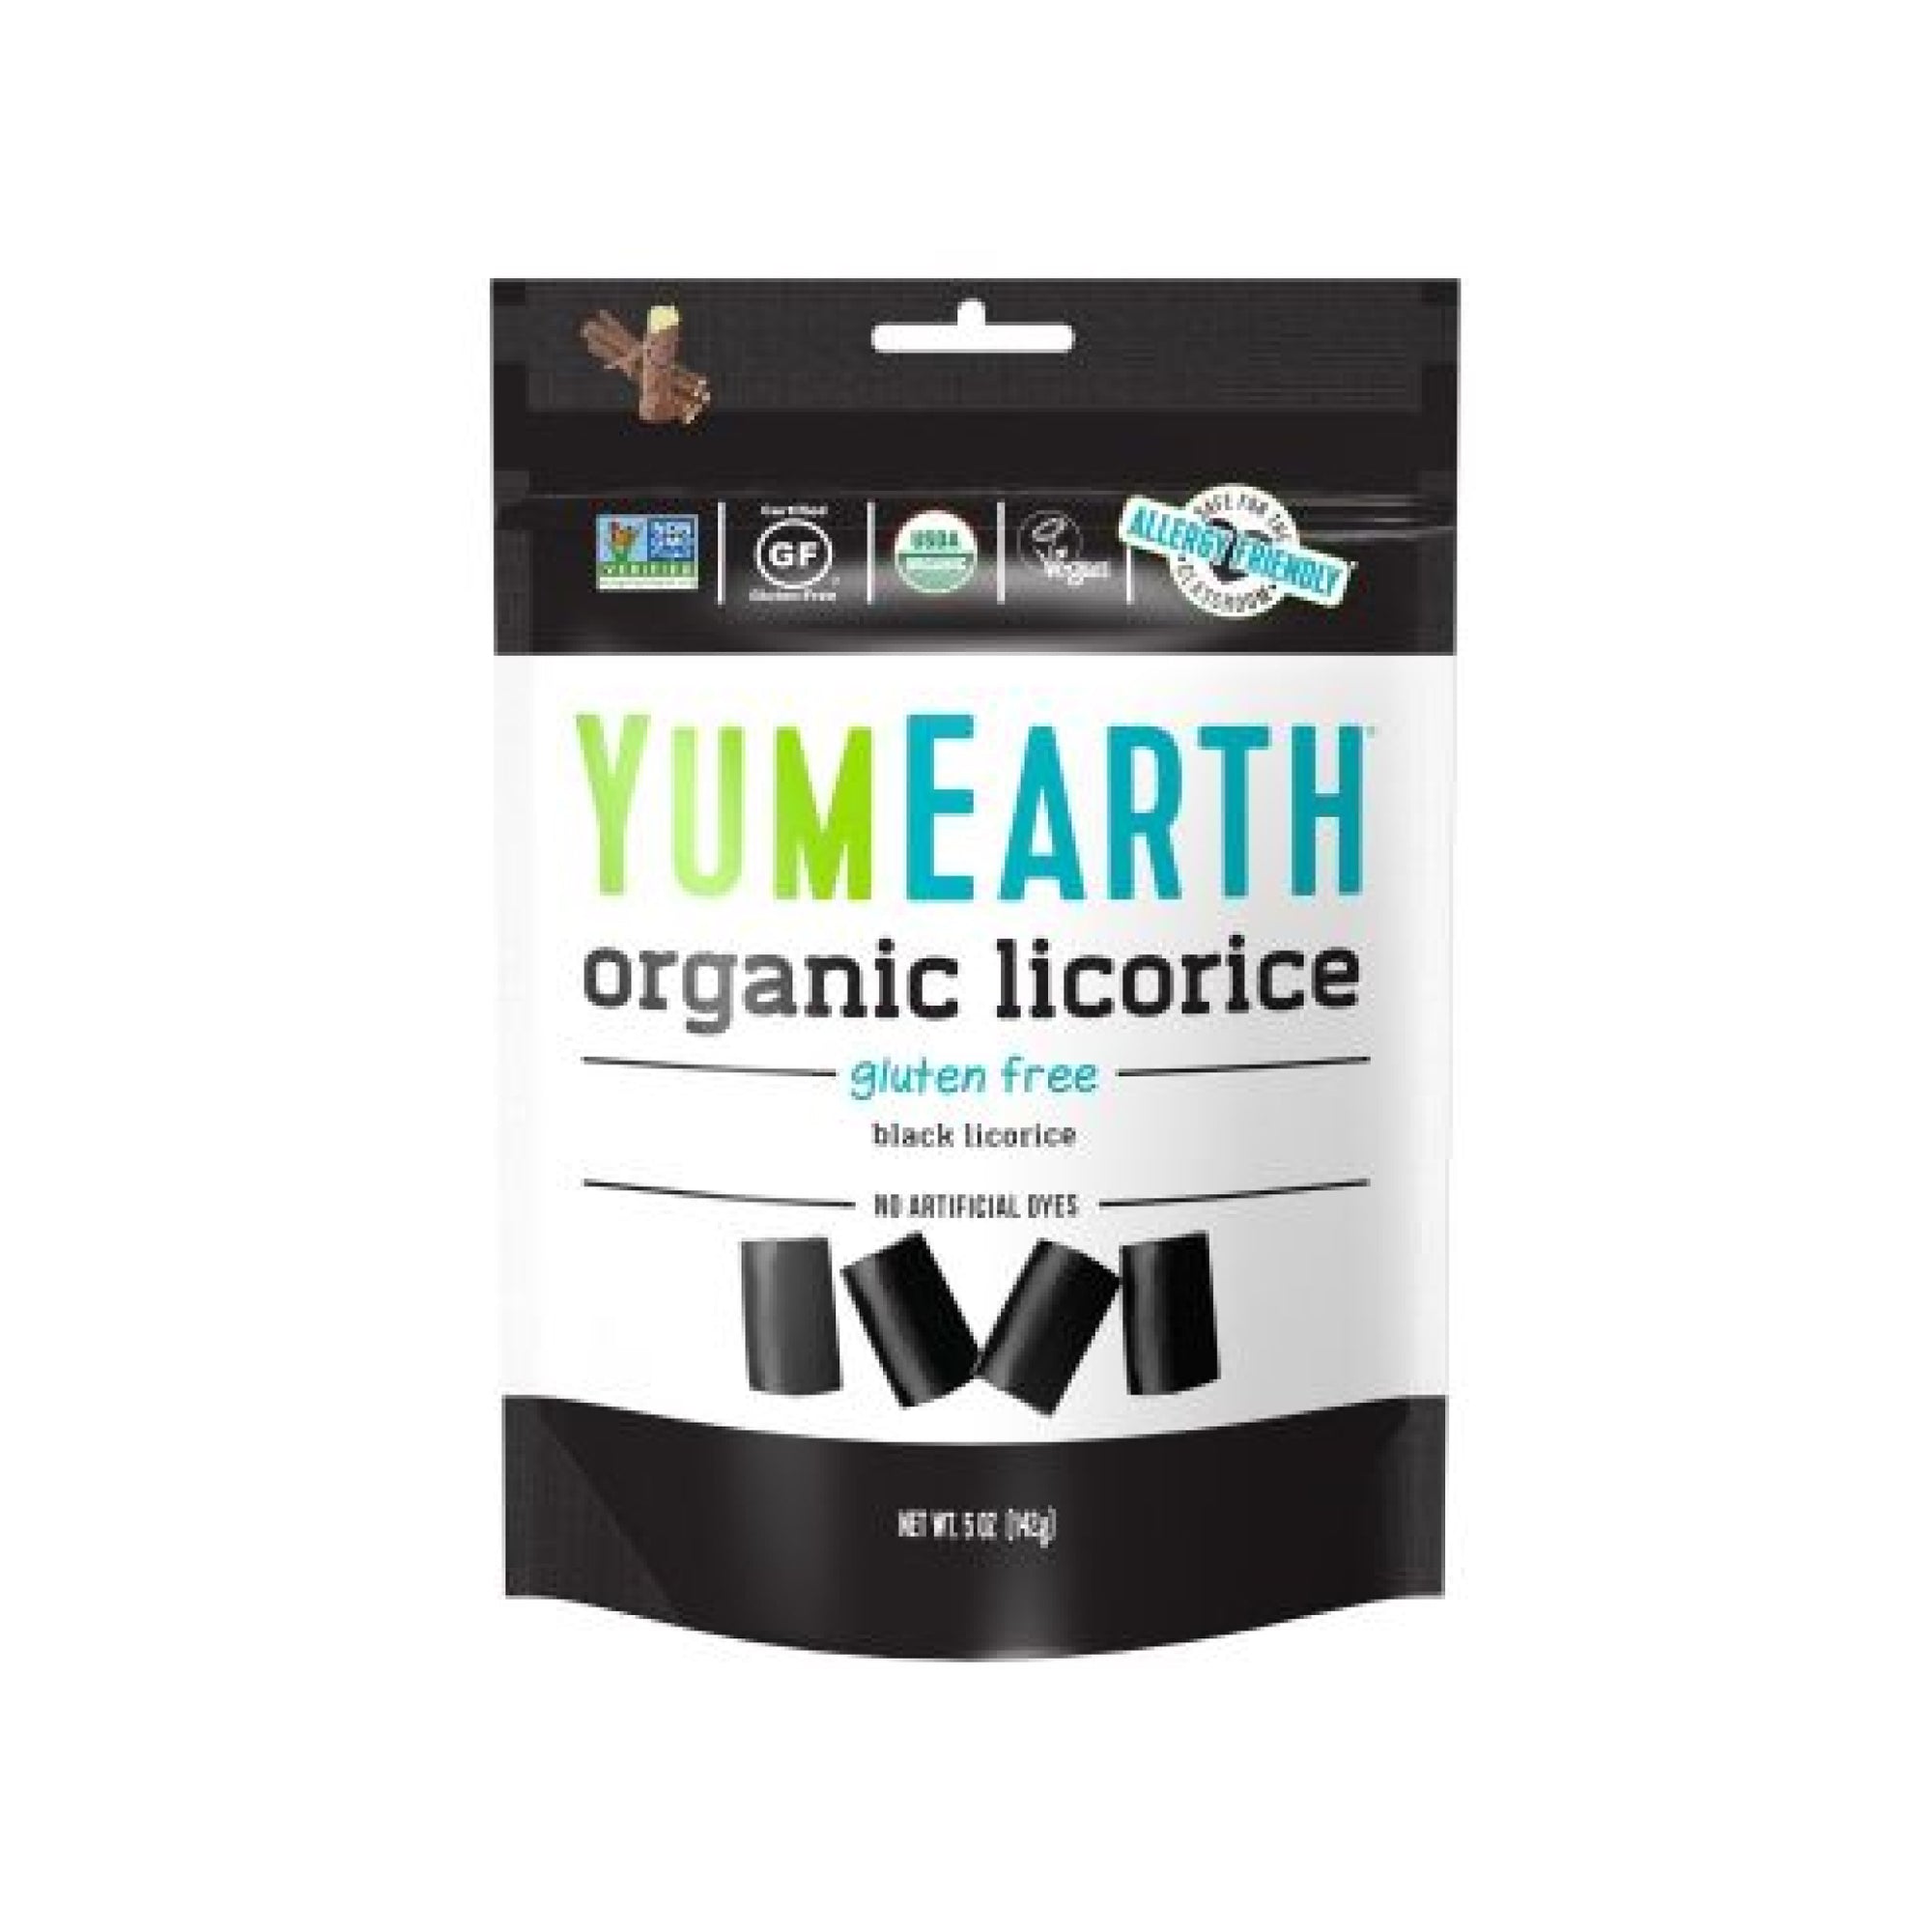 Yum Earth Organic Black Licorice 142g